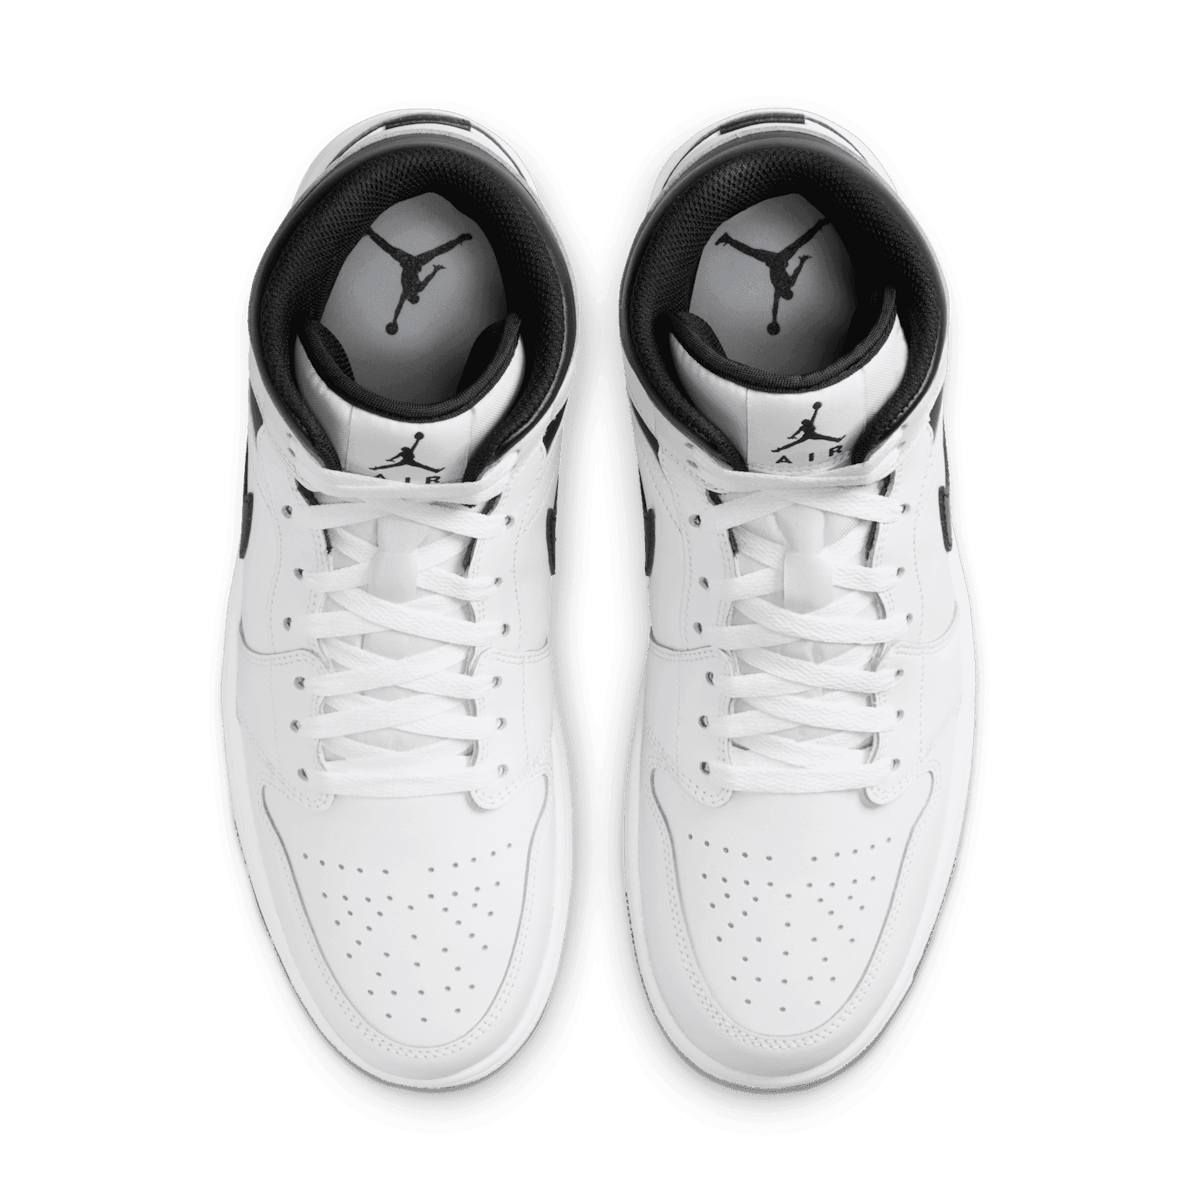 Air Jordan 1 Mid White Black Angle 1